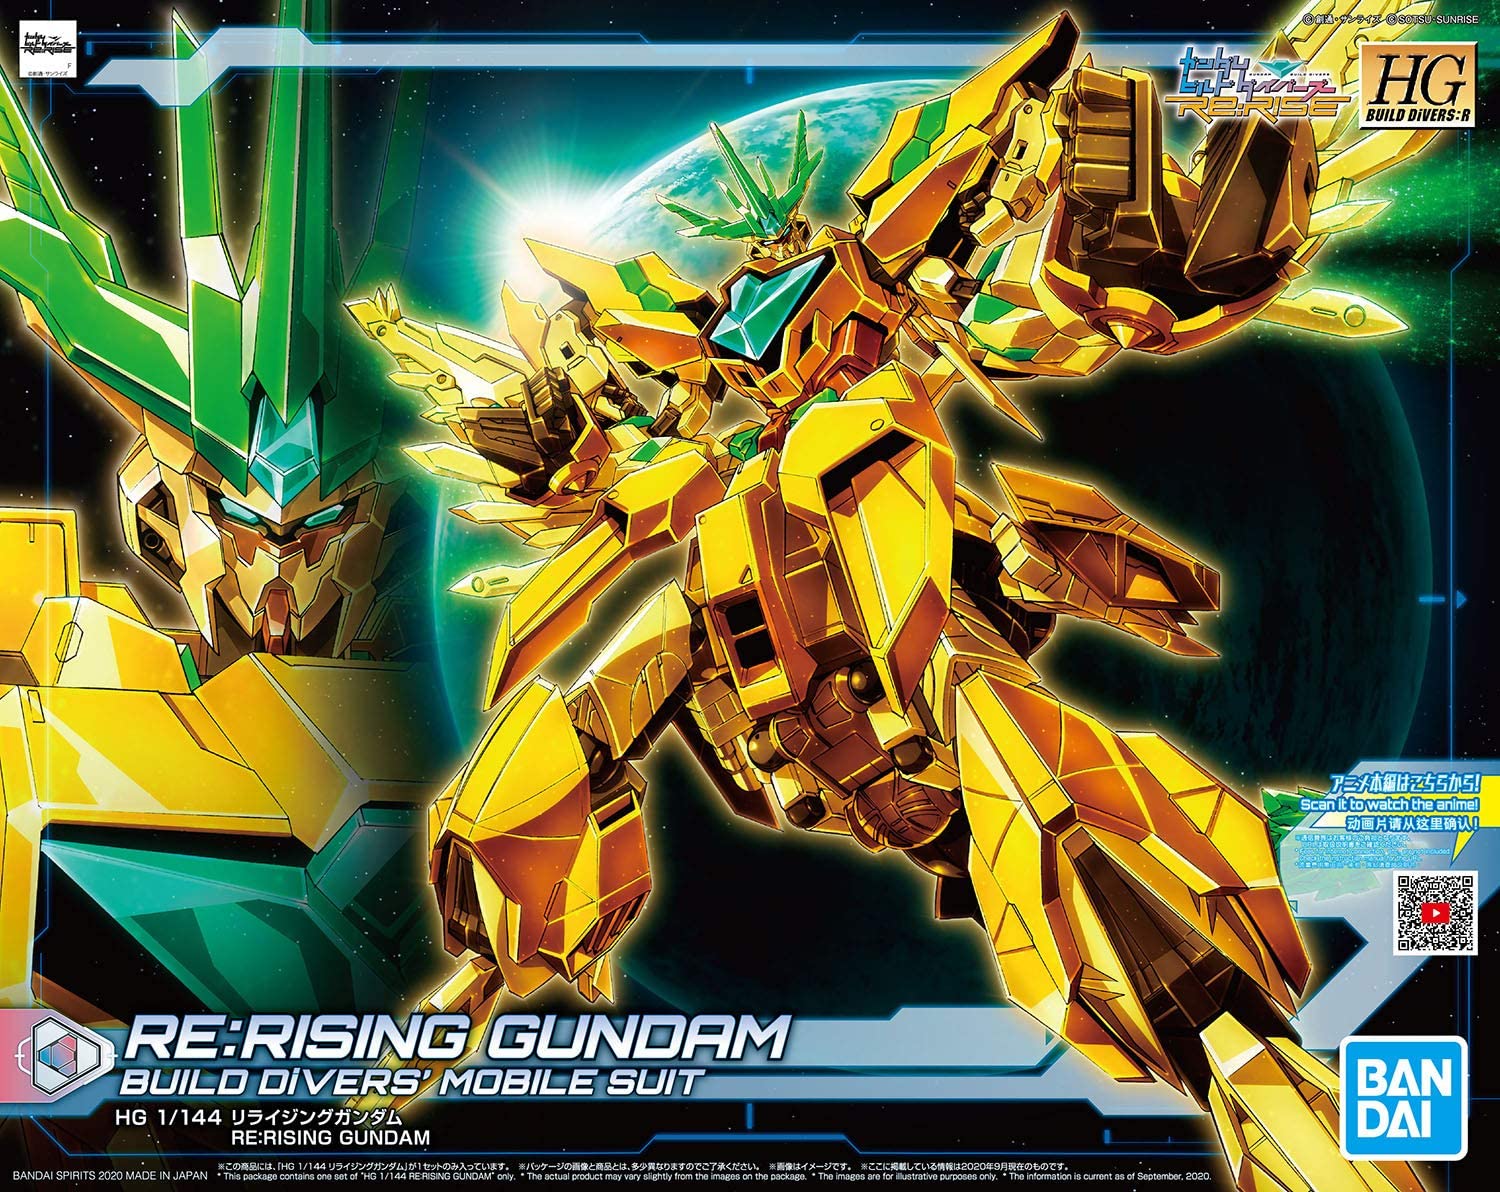 HG Re:Rising Gundam 1/144